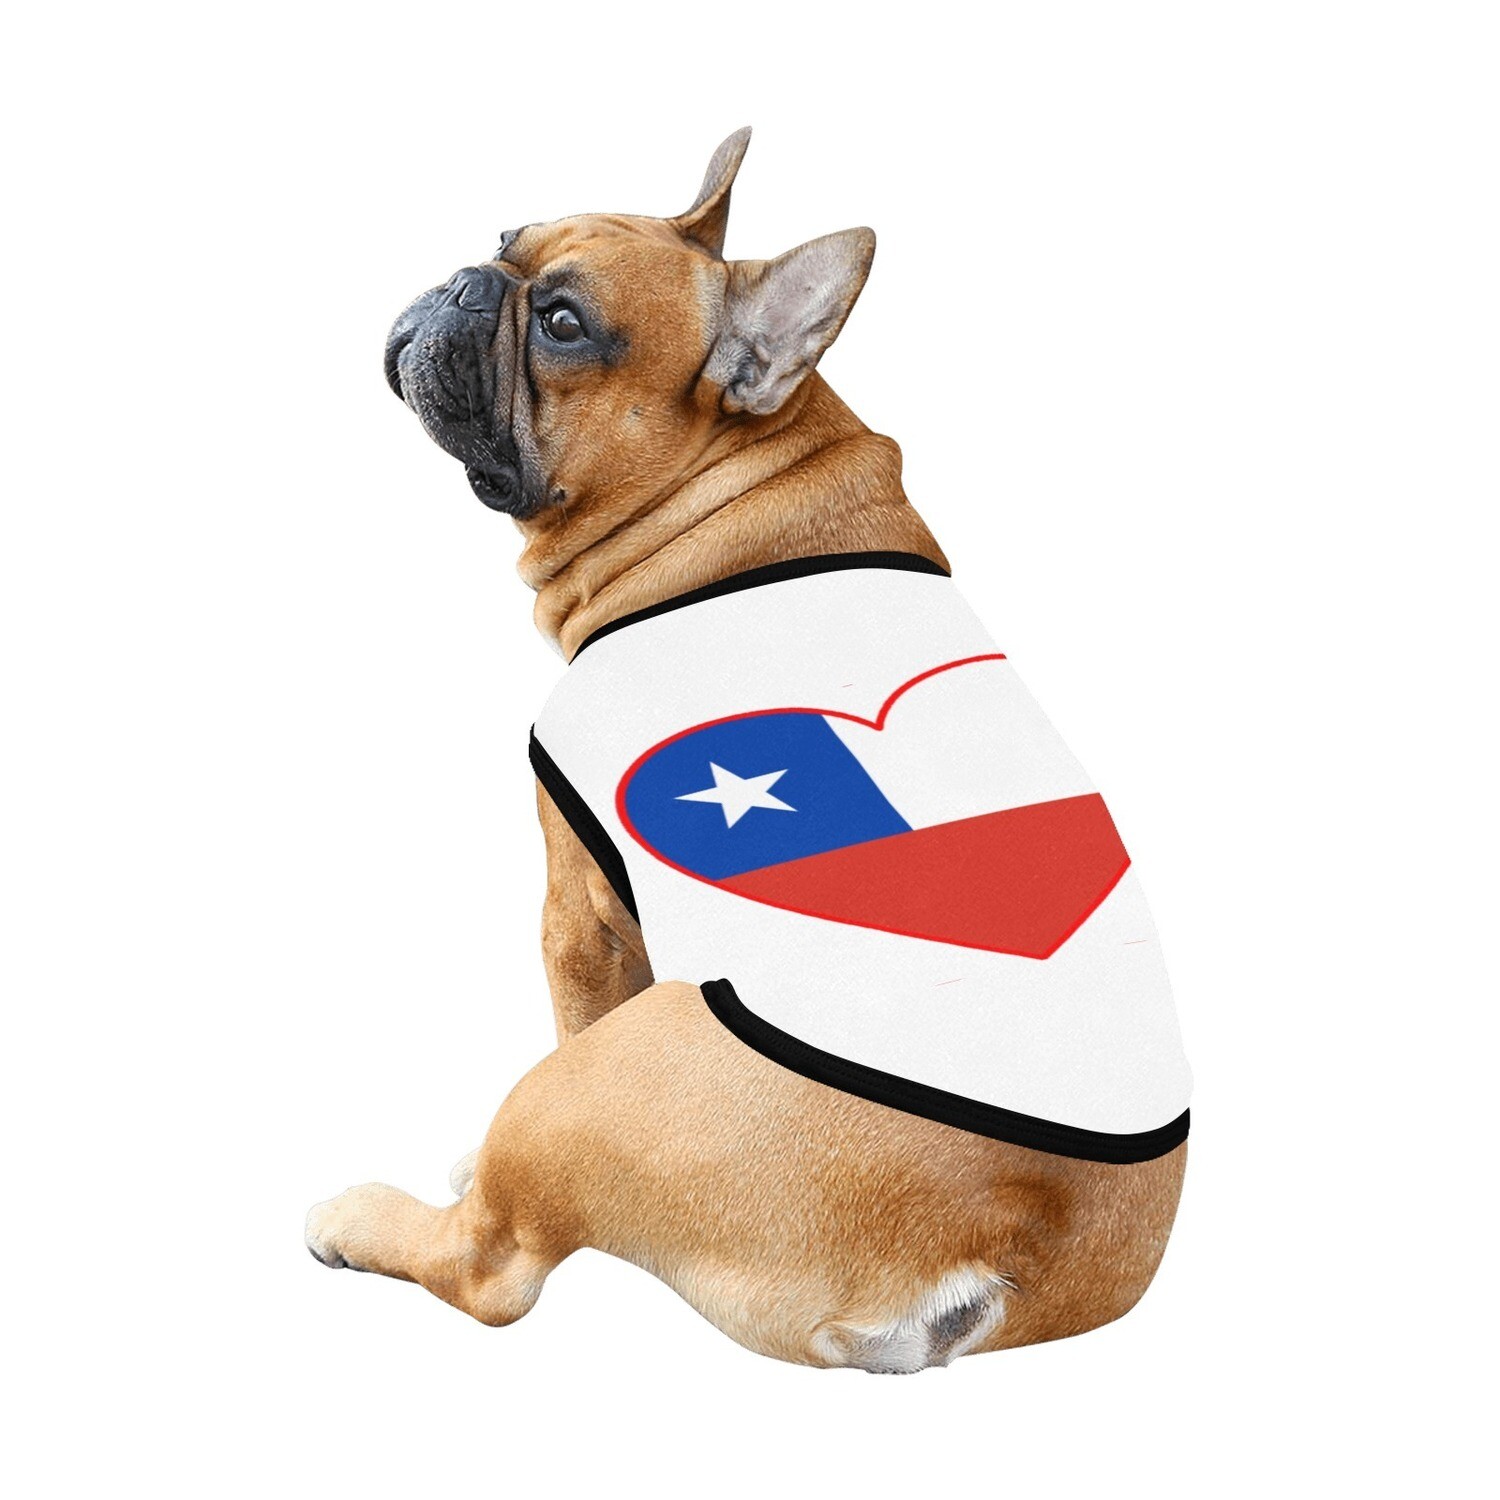 🐕🇨🇱 I love Chile dog t-shirt, dog gift, dog tank top, dog shirt, dog clothes, gift, 7 sizes XS to 3XL, Chilean flag, heart shape, white